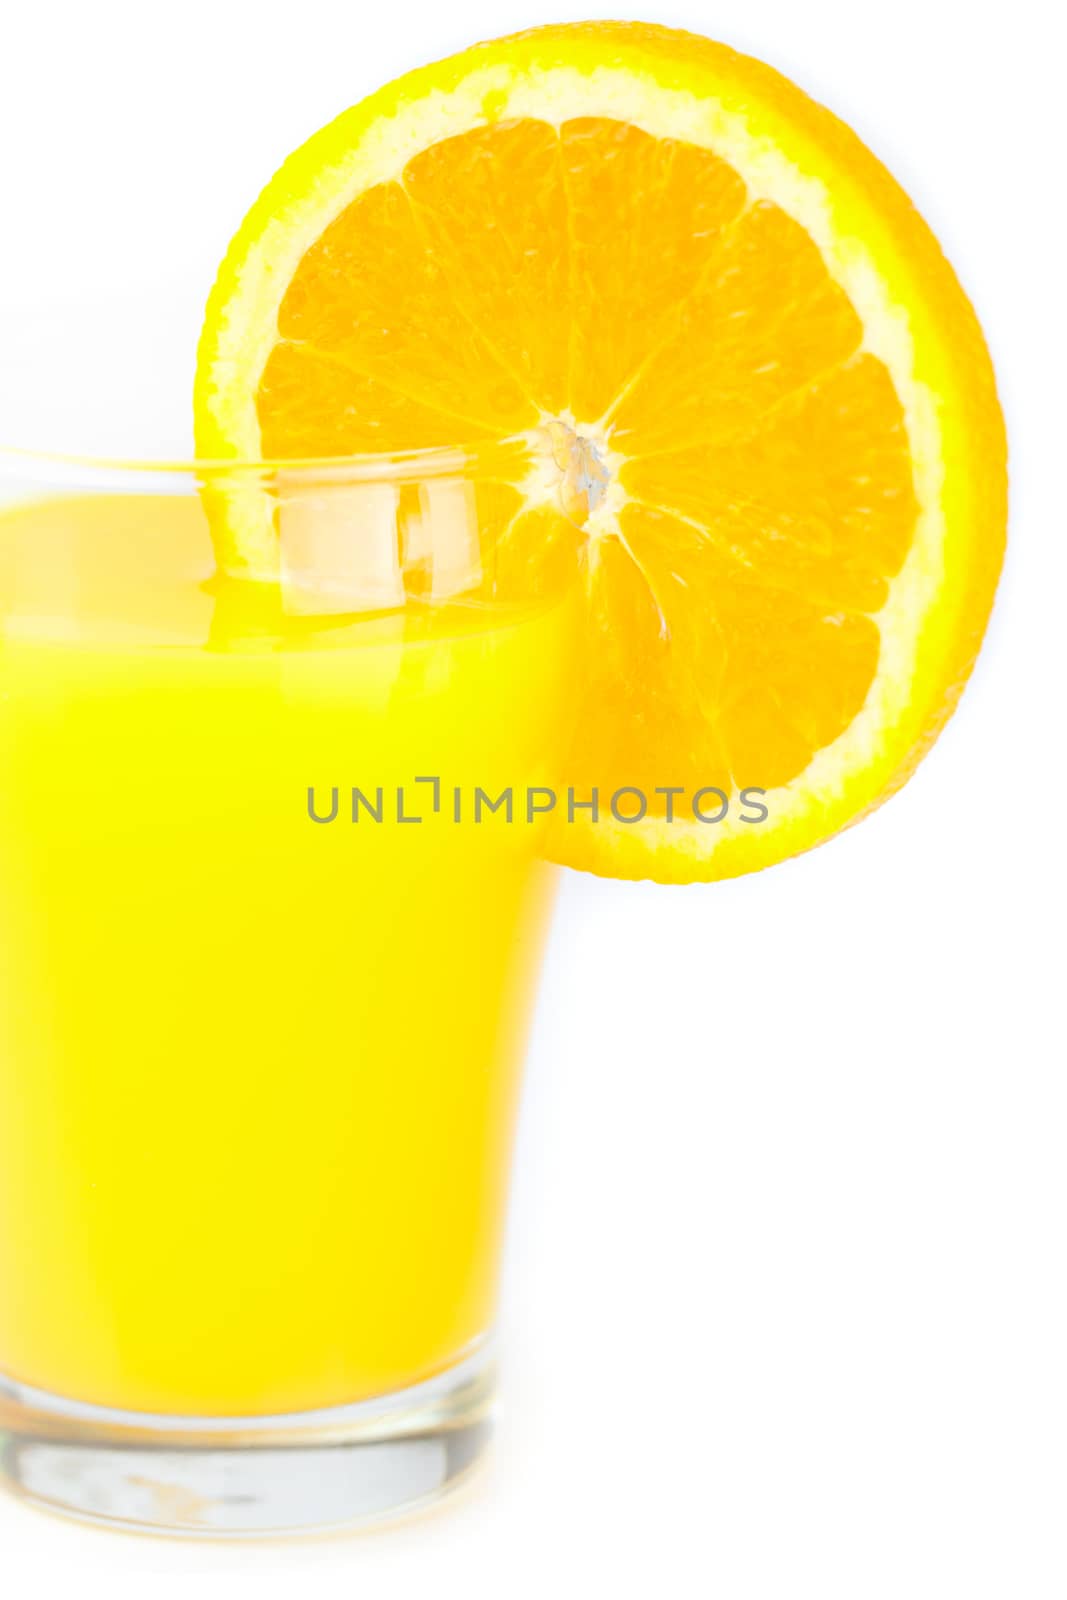 orange and a glass of orange juice isolated on white by jannyjus